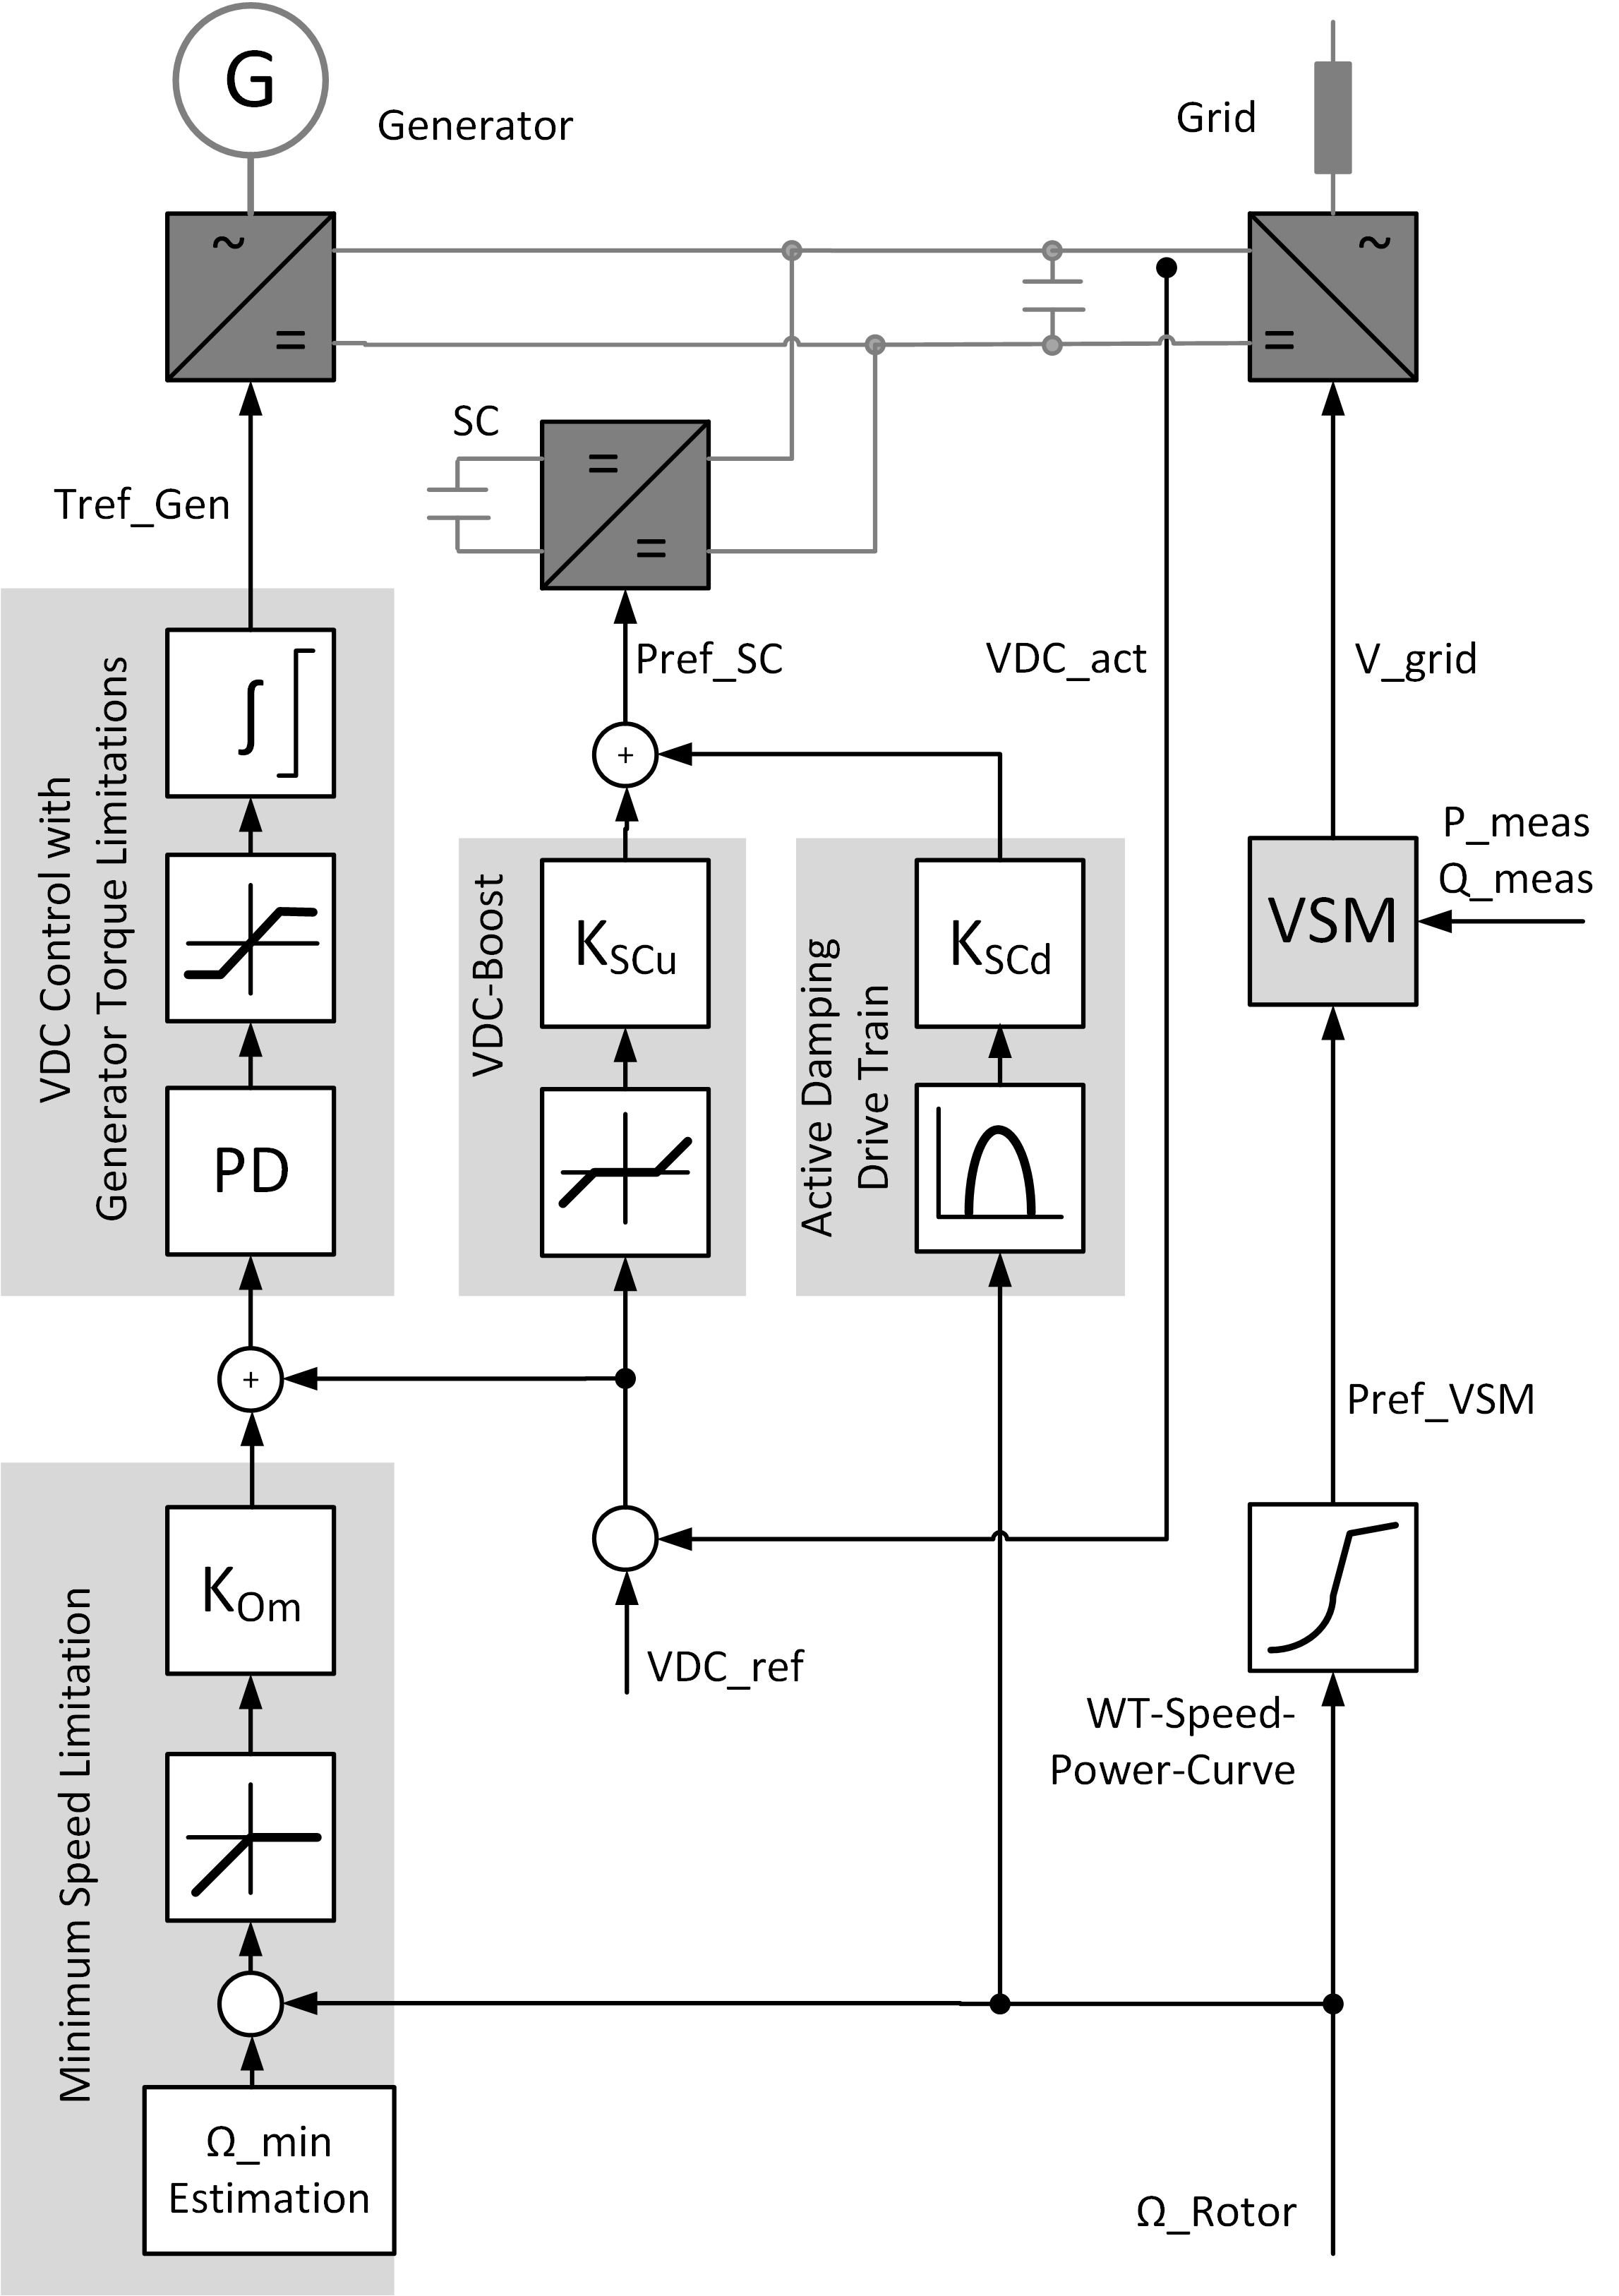 Figure 1: Control scheme for integrating a super capacitor.